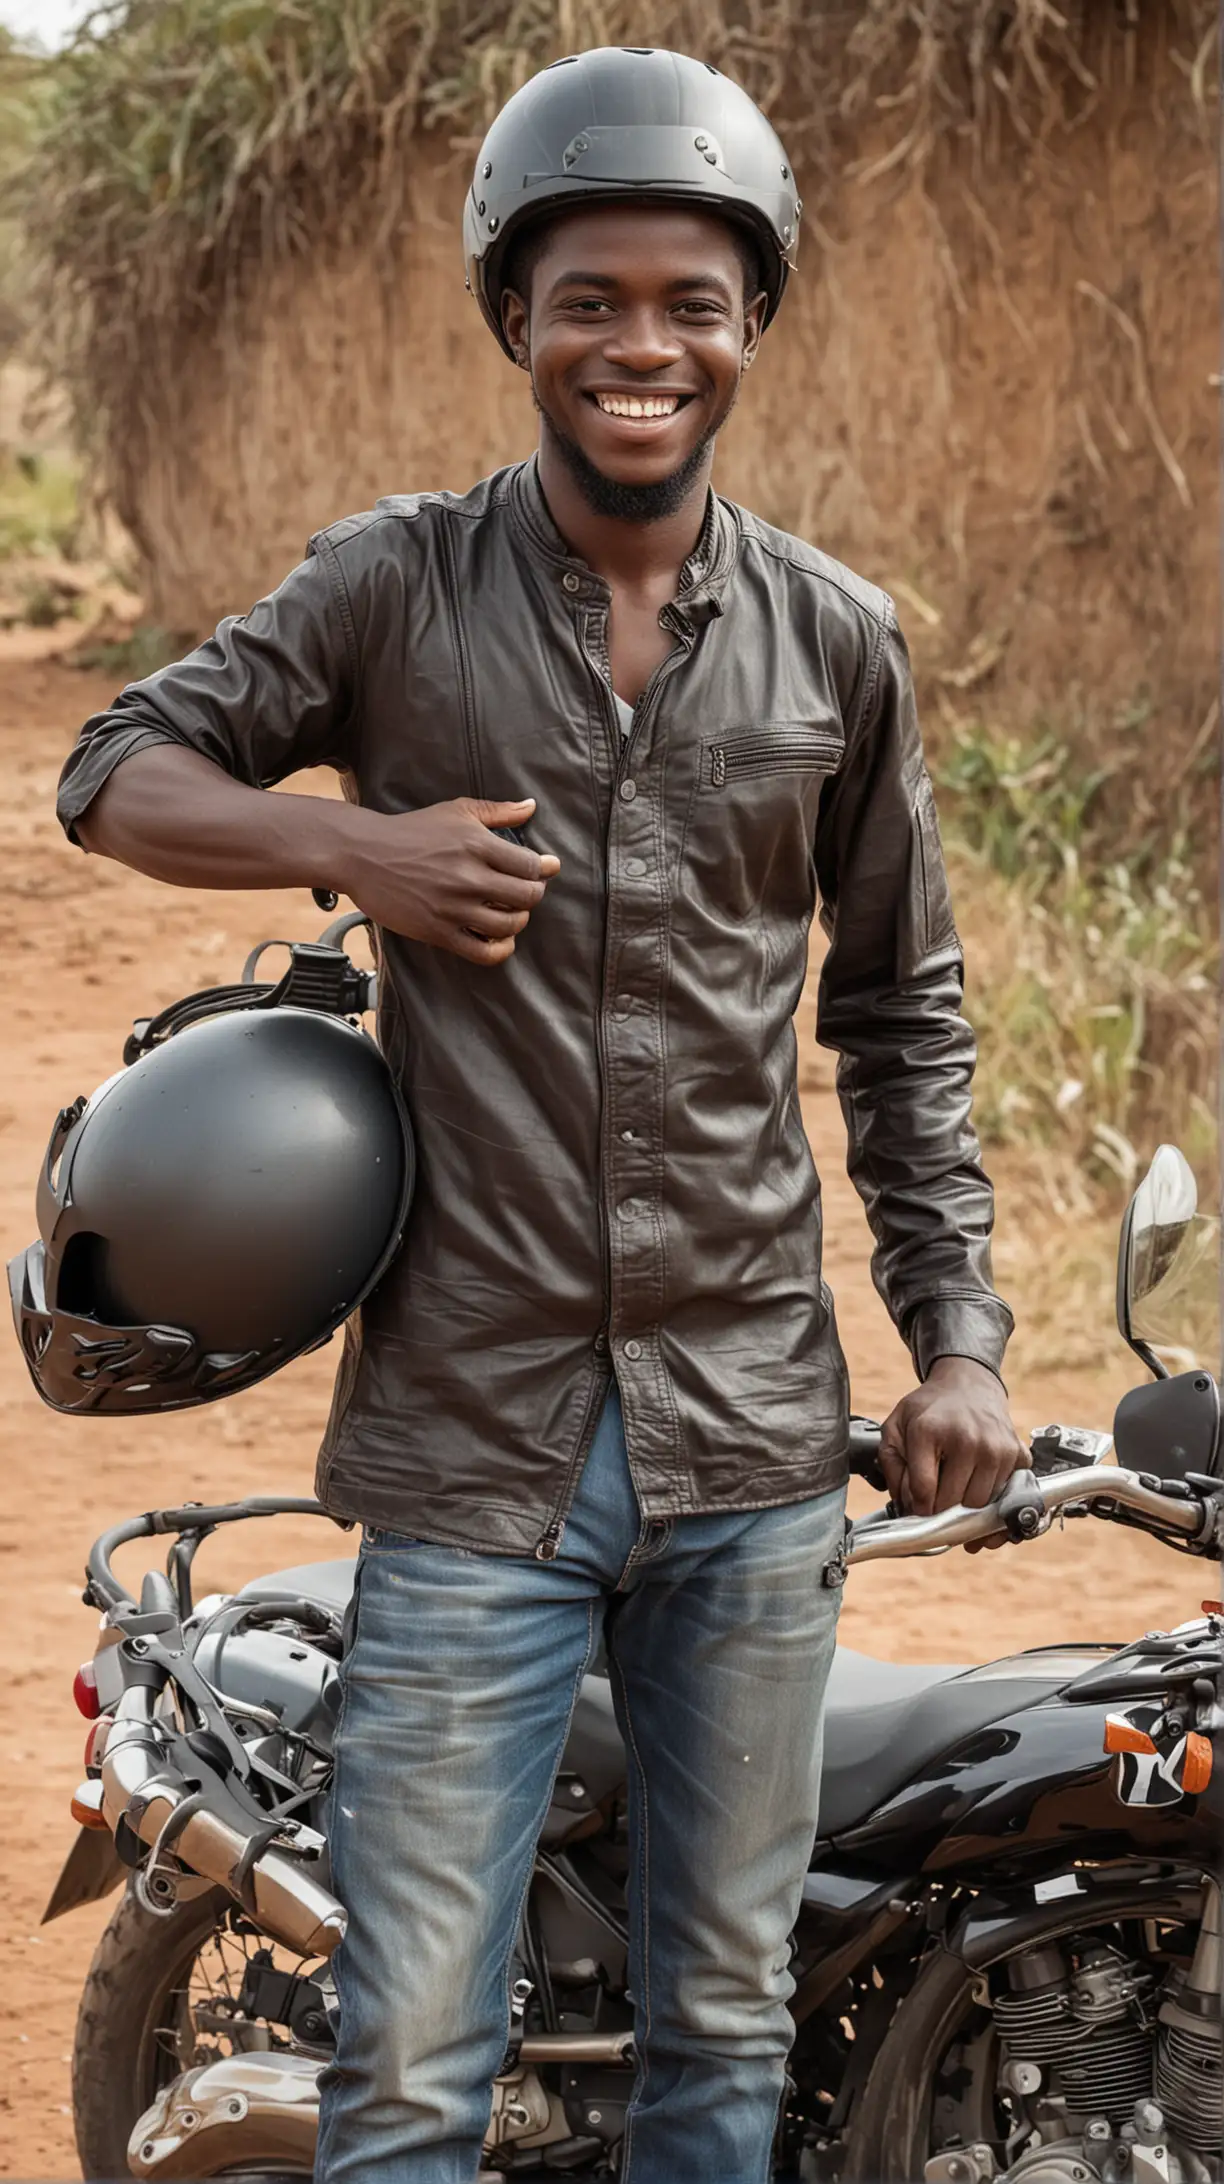 Smiling African Motorbike Rider Holding Helmet